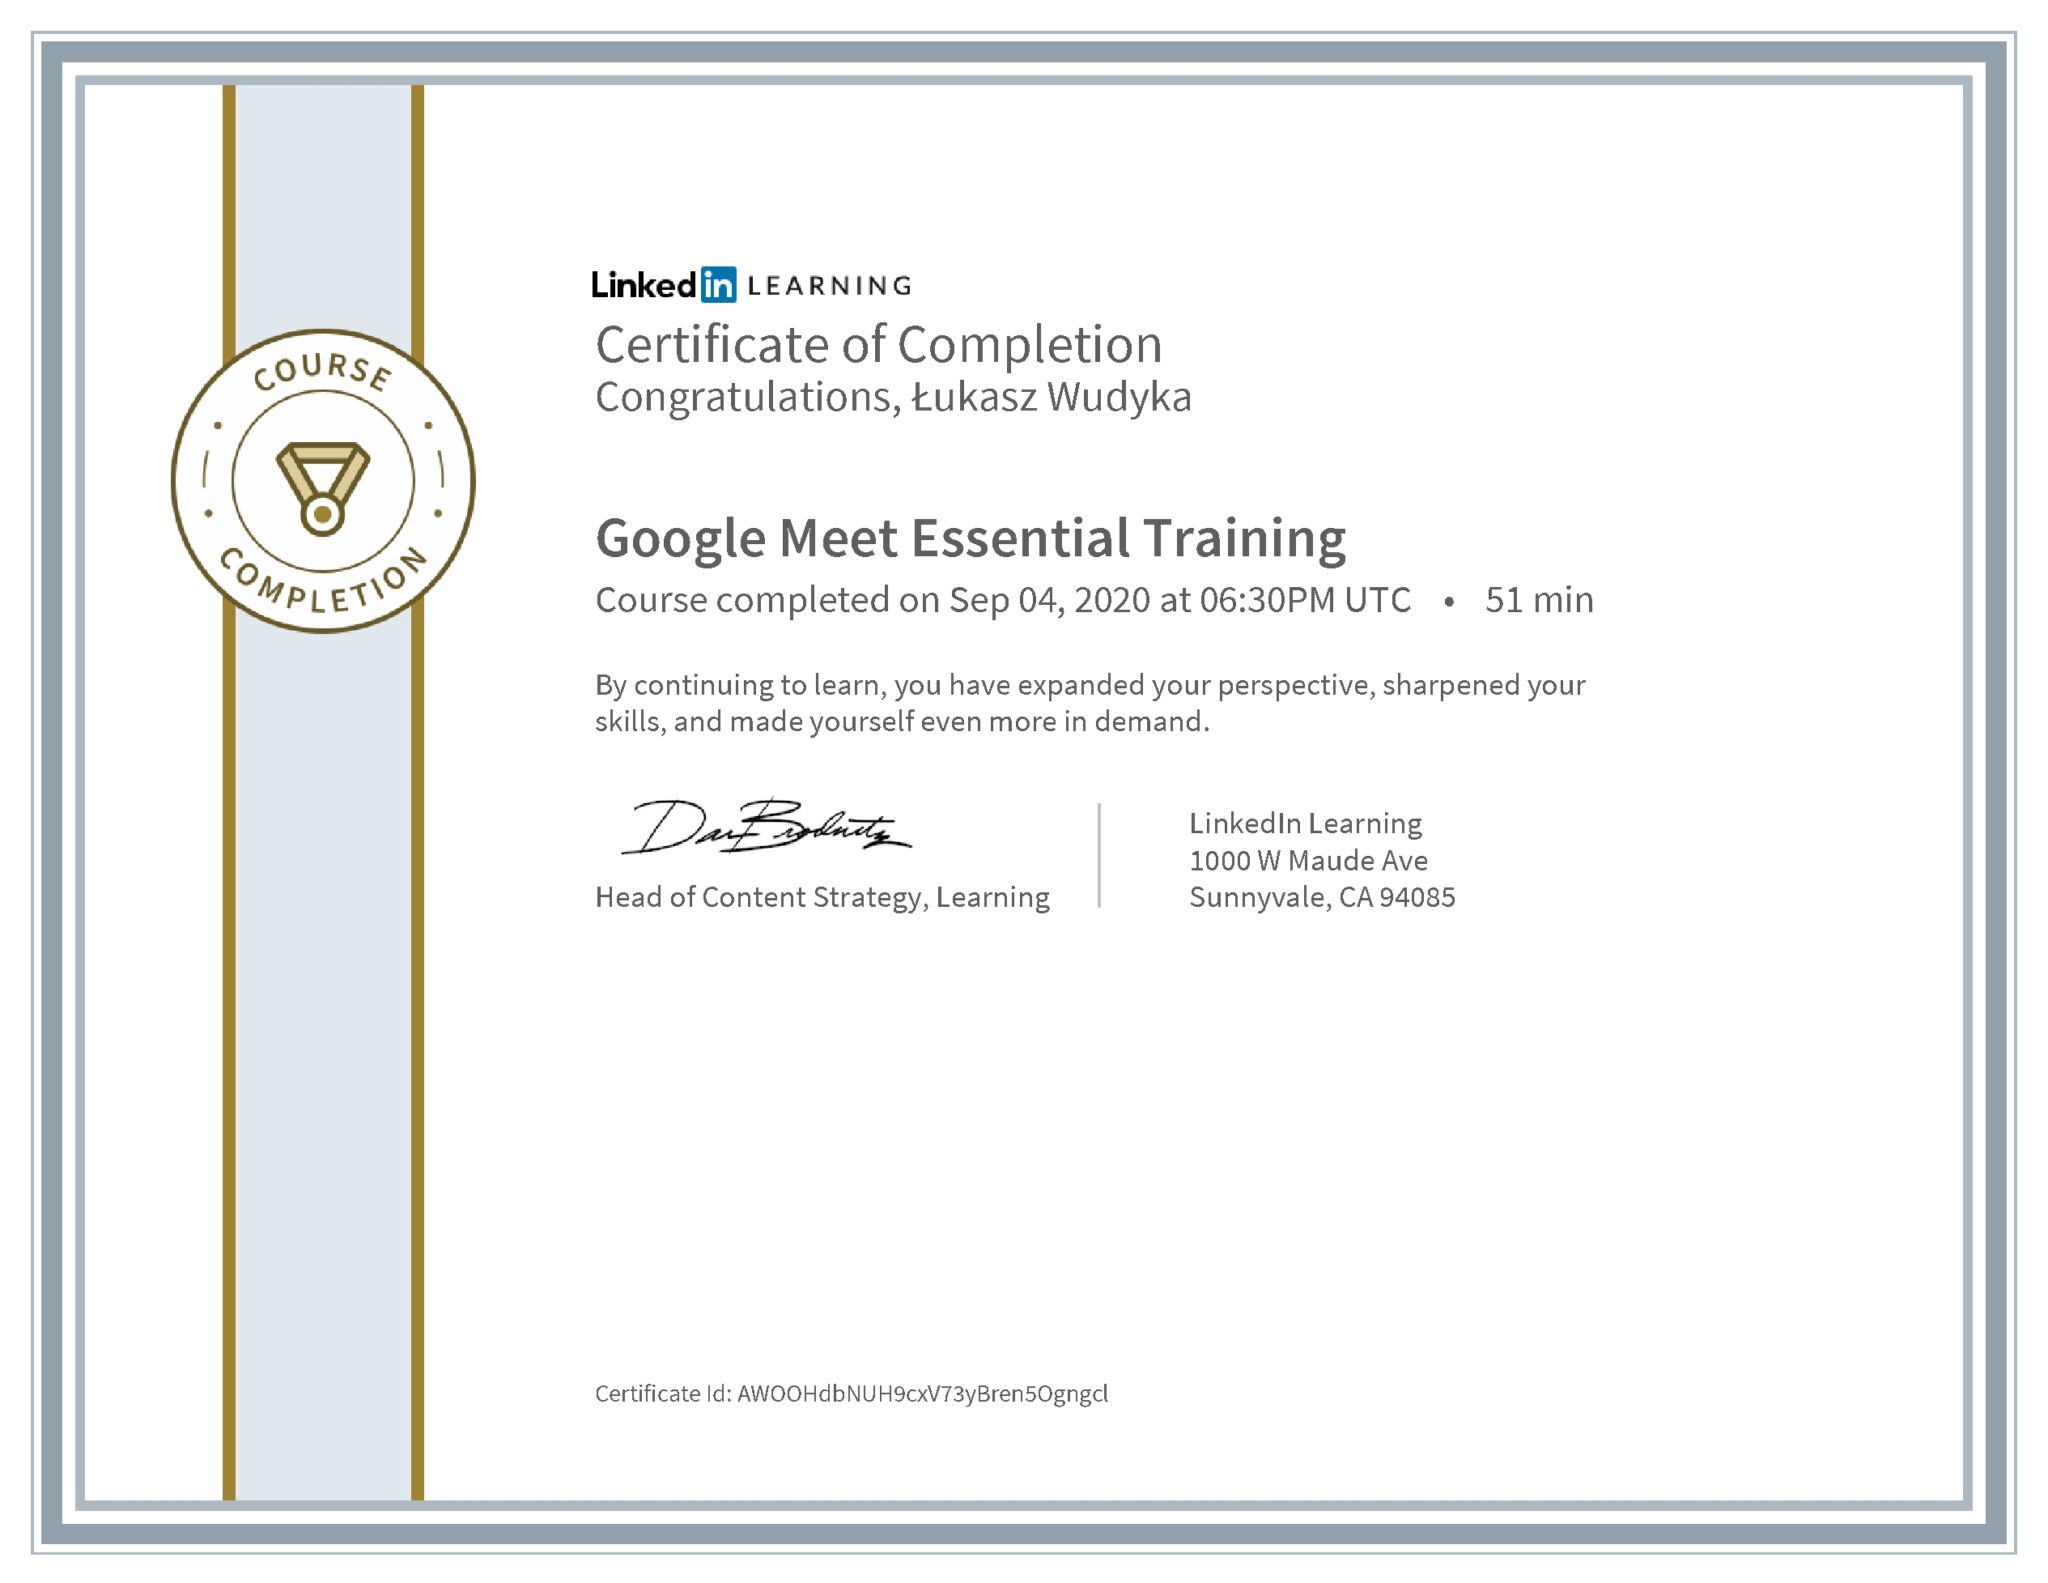 Łukasz Wudyka certyfikat LinkedIn Google Meet Essential Training